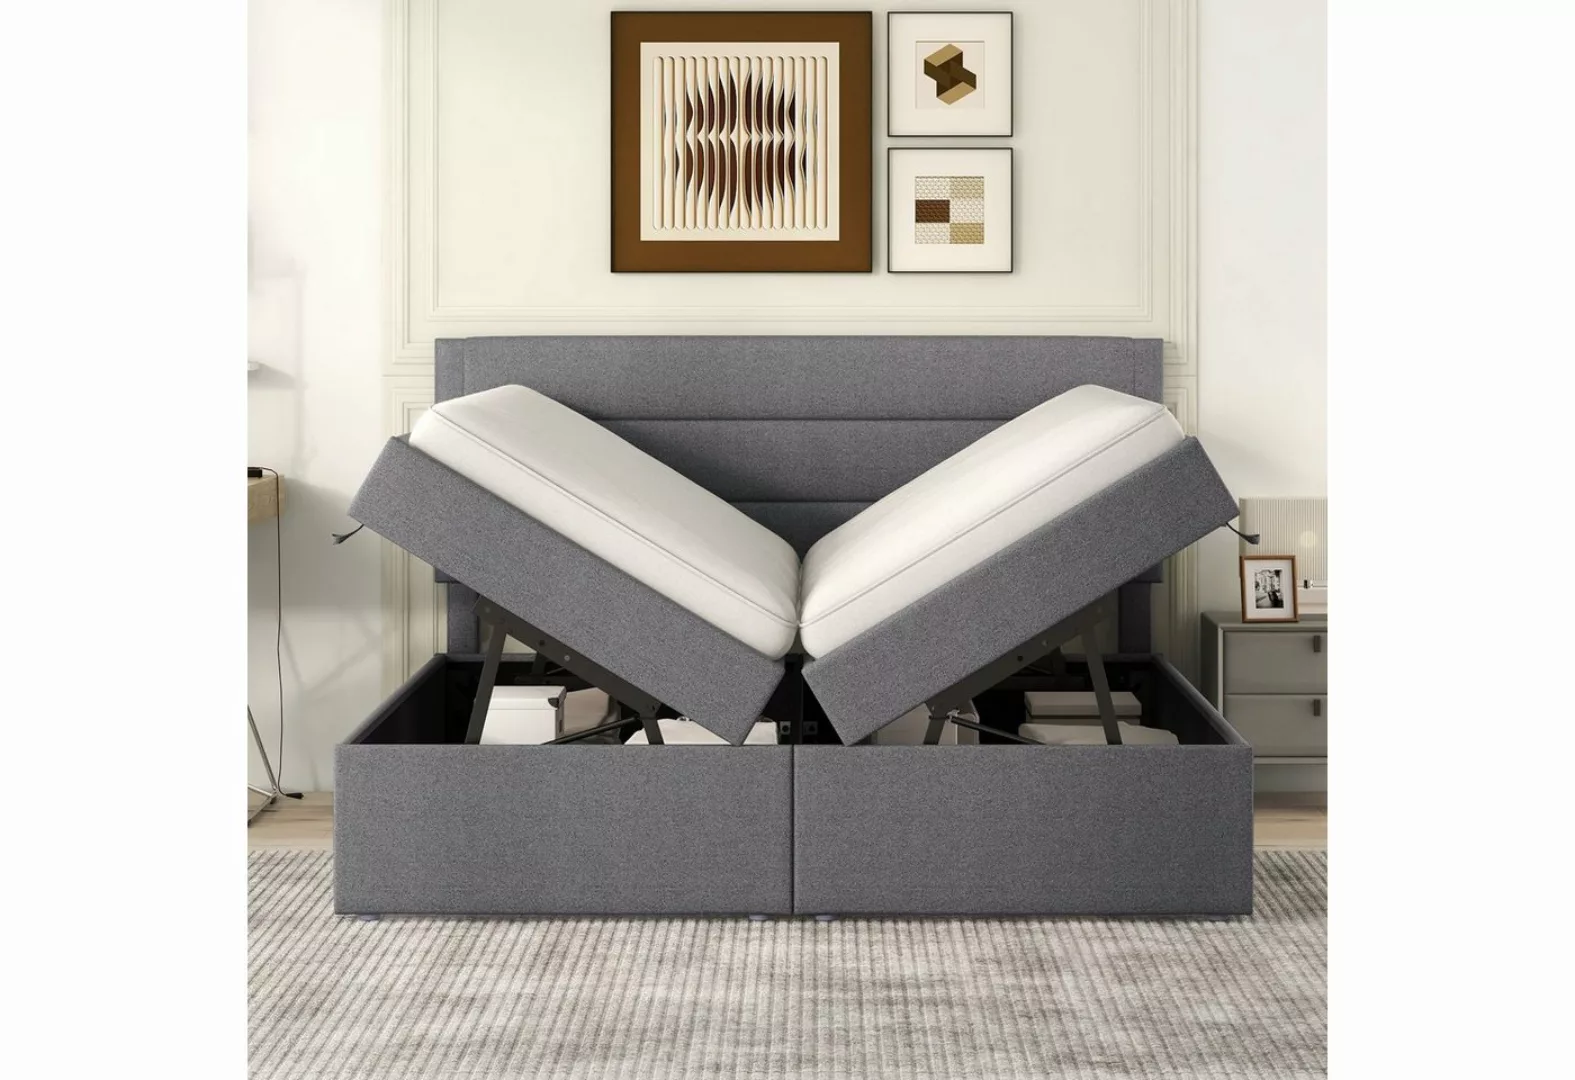 Fangqi Polsterbett 200x140 Polsterbett,Doppelbett mit Metalllattenrost,groß günstig online kaufen